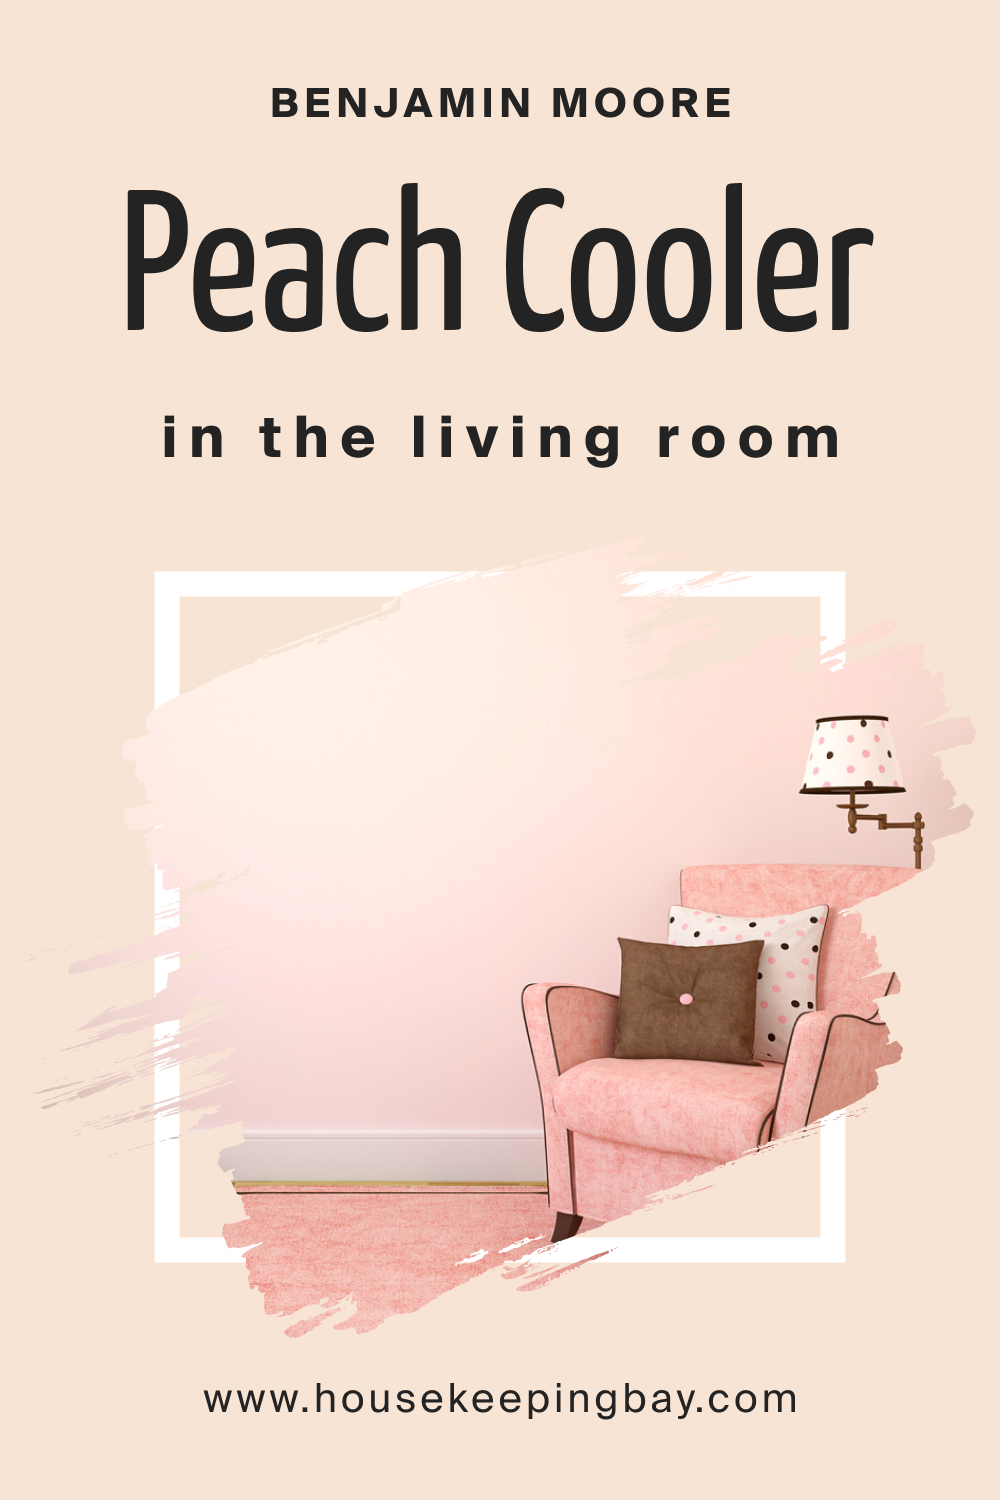 Benjamin Moore. Peach Cooler 022 in the Living Room